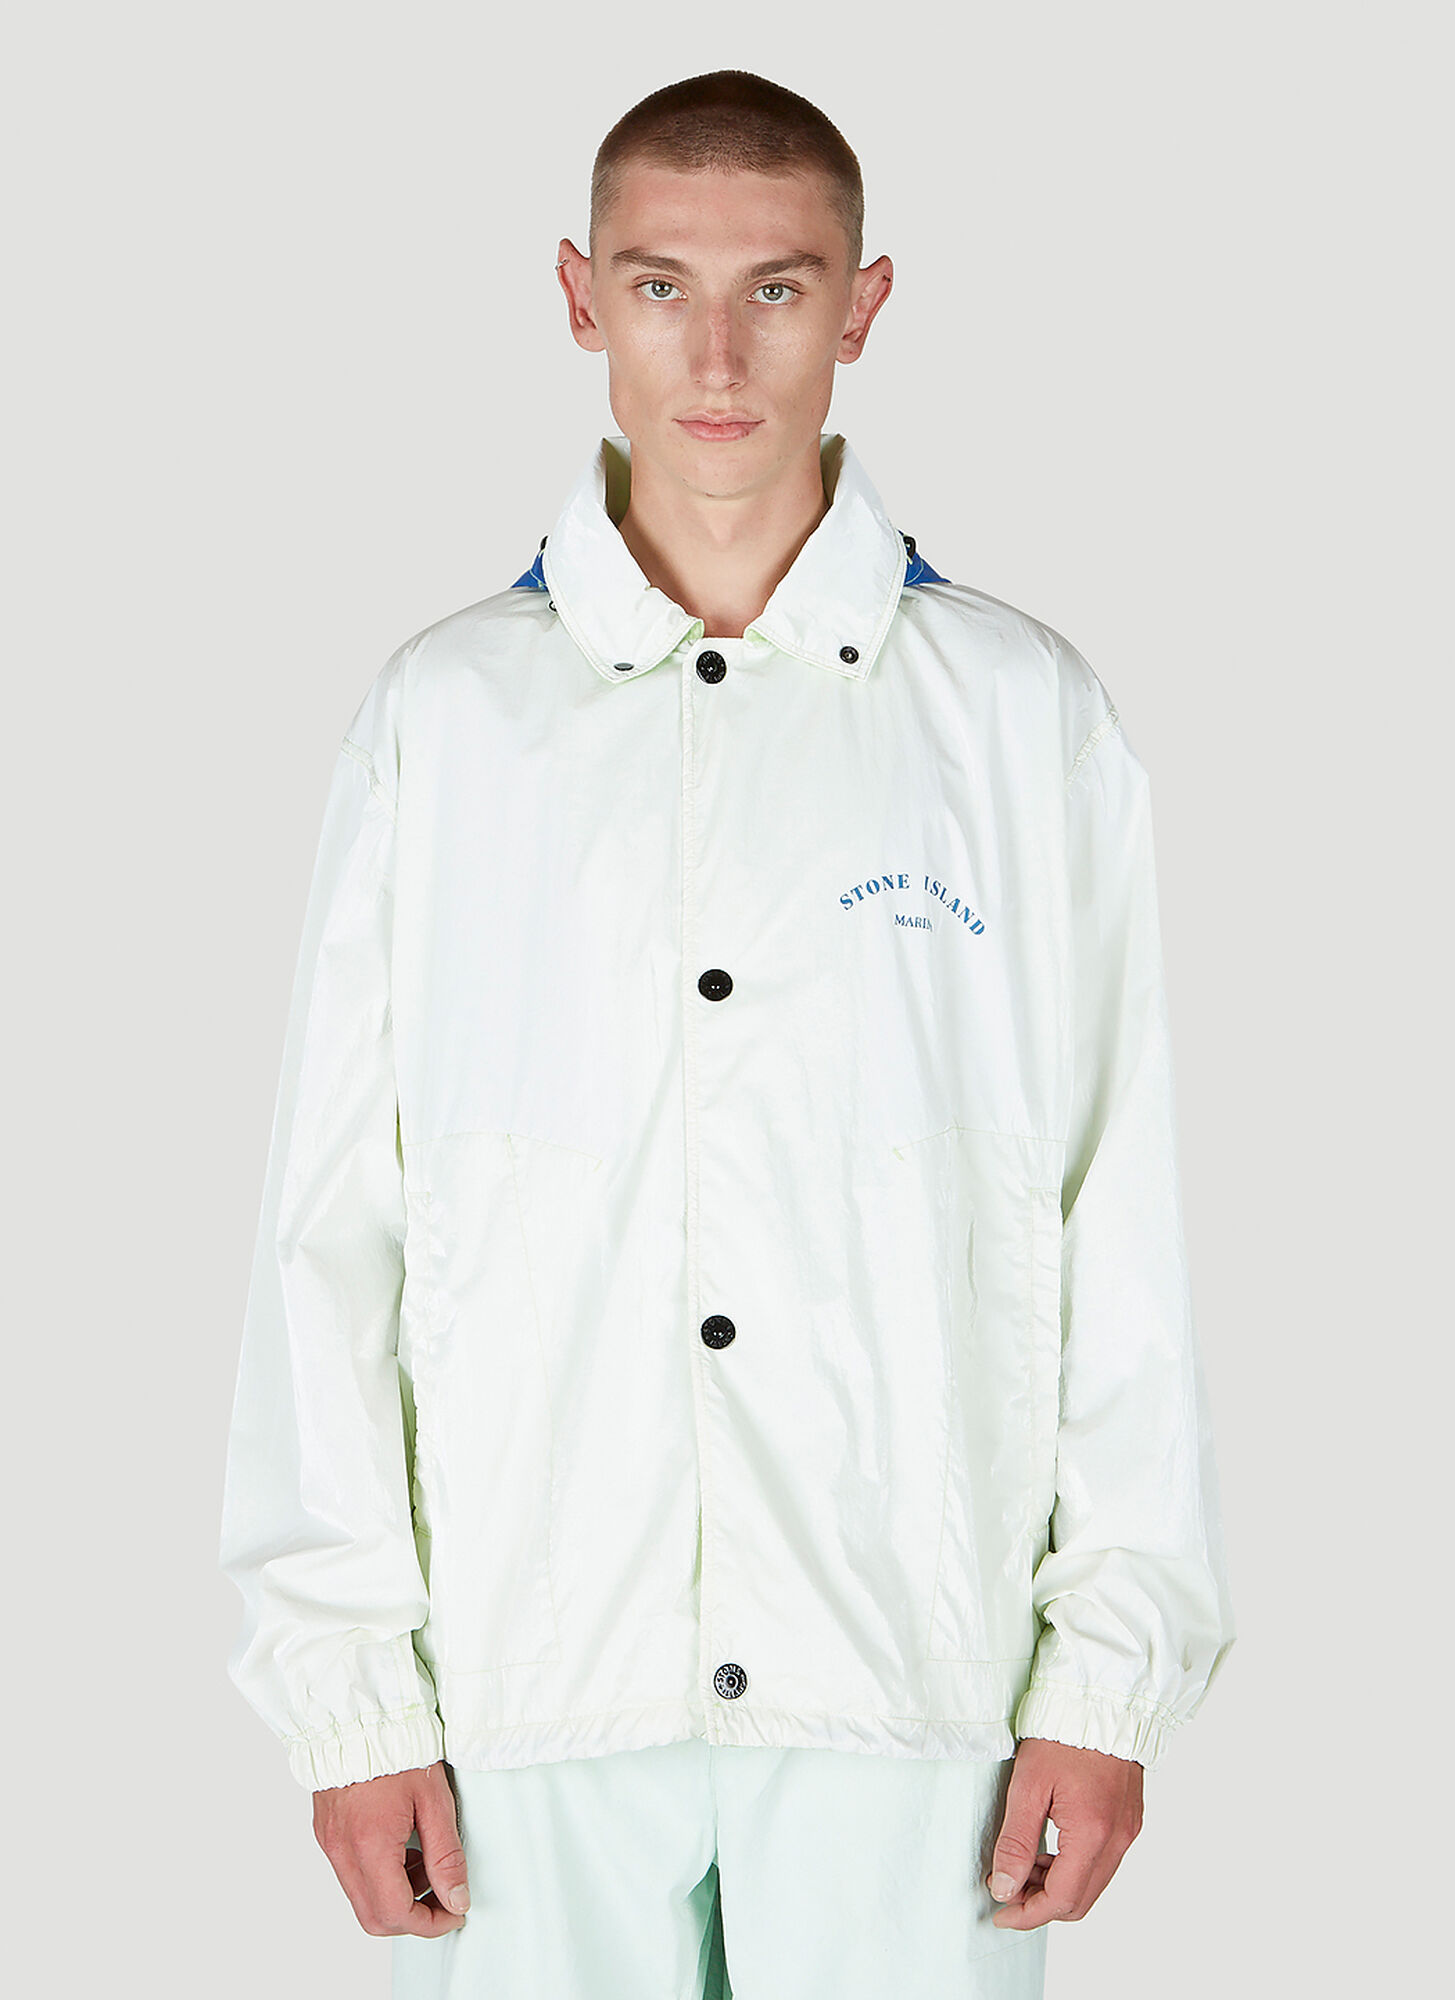 Stone Island Marina Coach Jacket In White | ModeSens